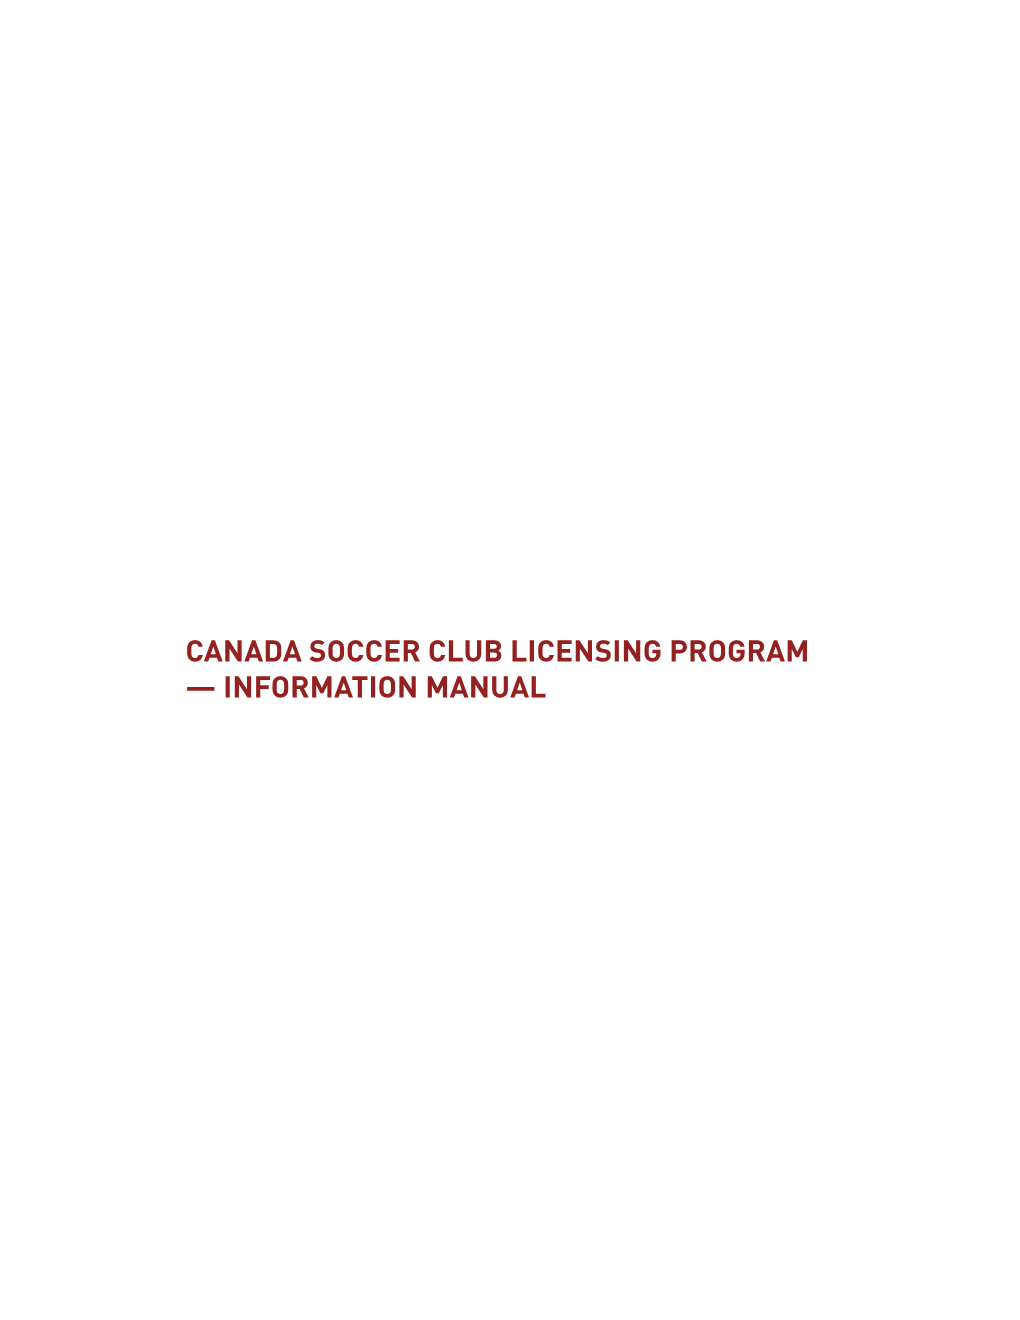 Canada Soccer Club Licensing Program — Information Manual Contents